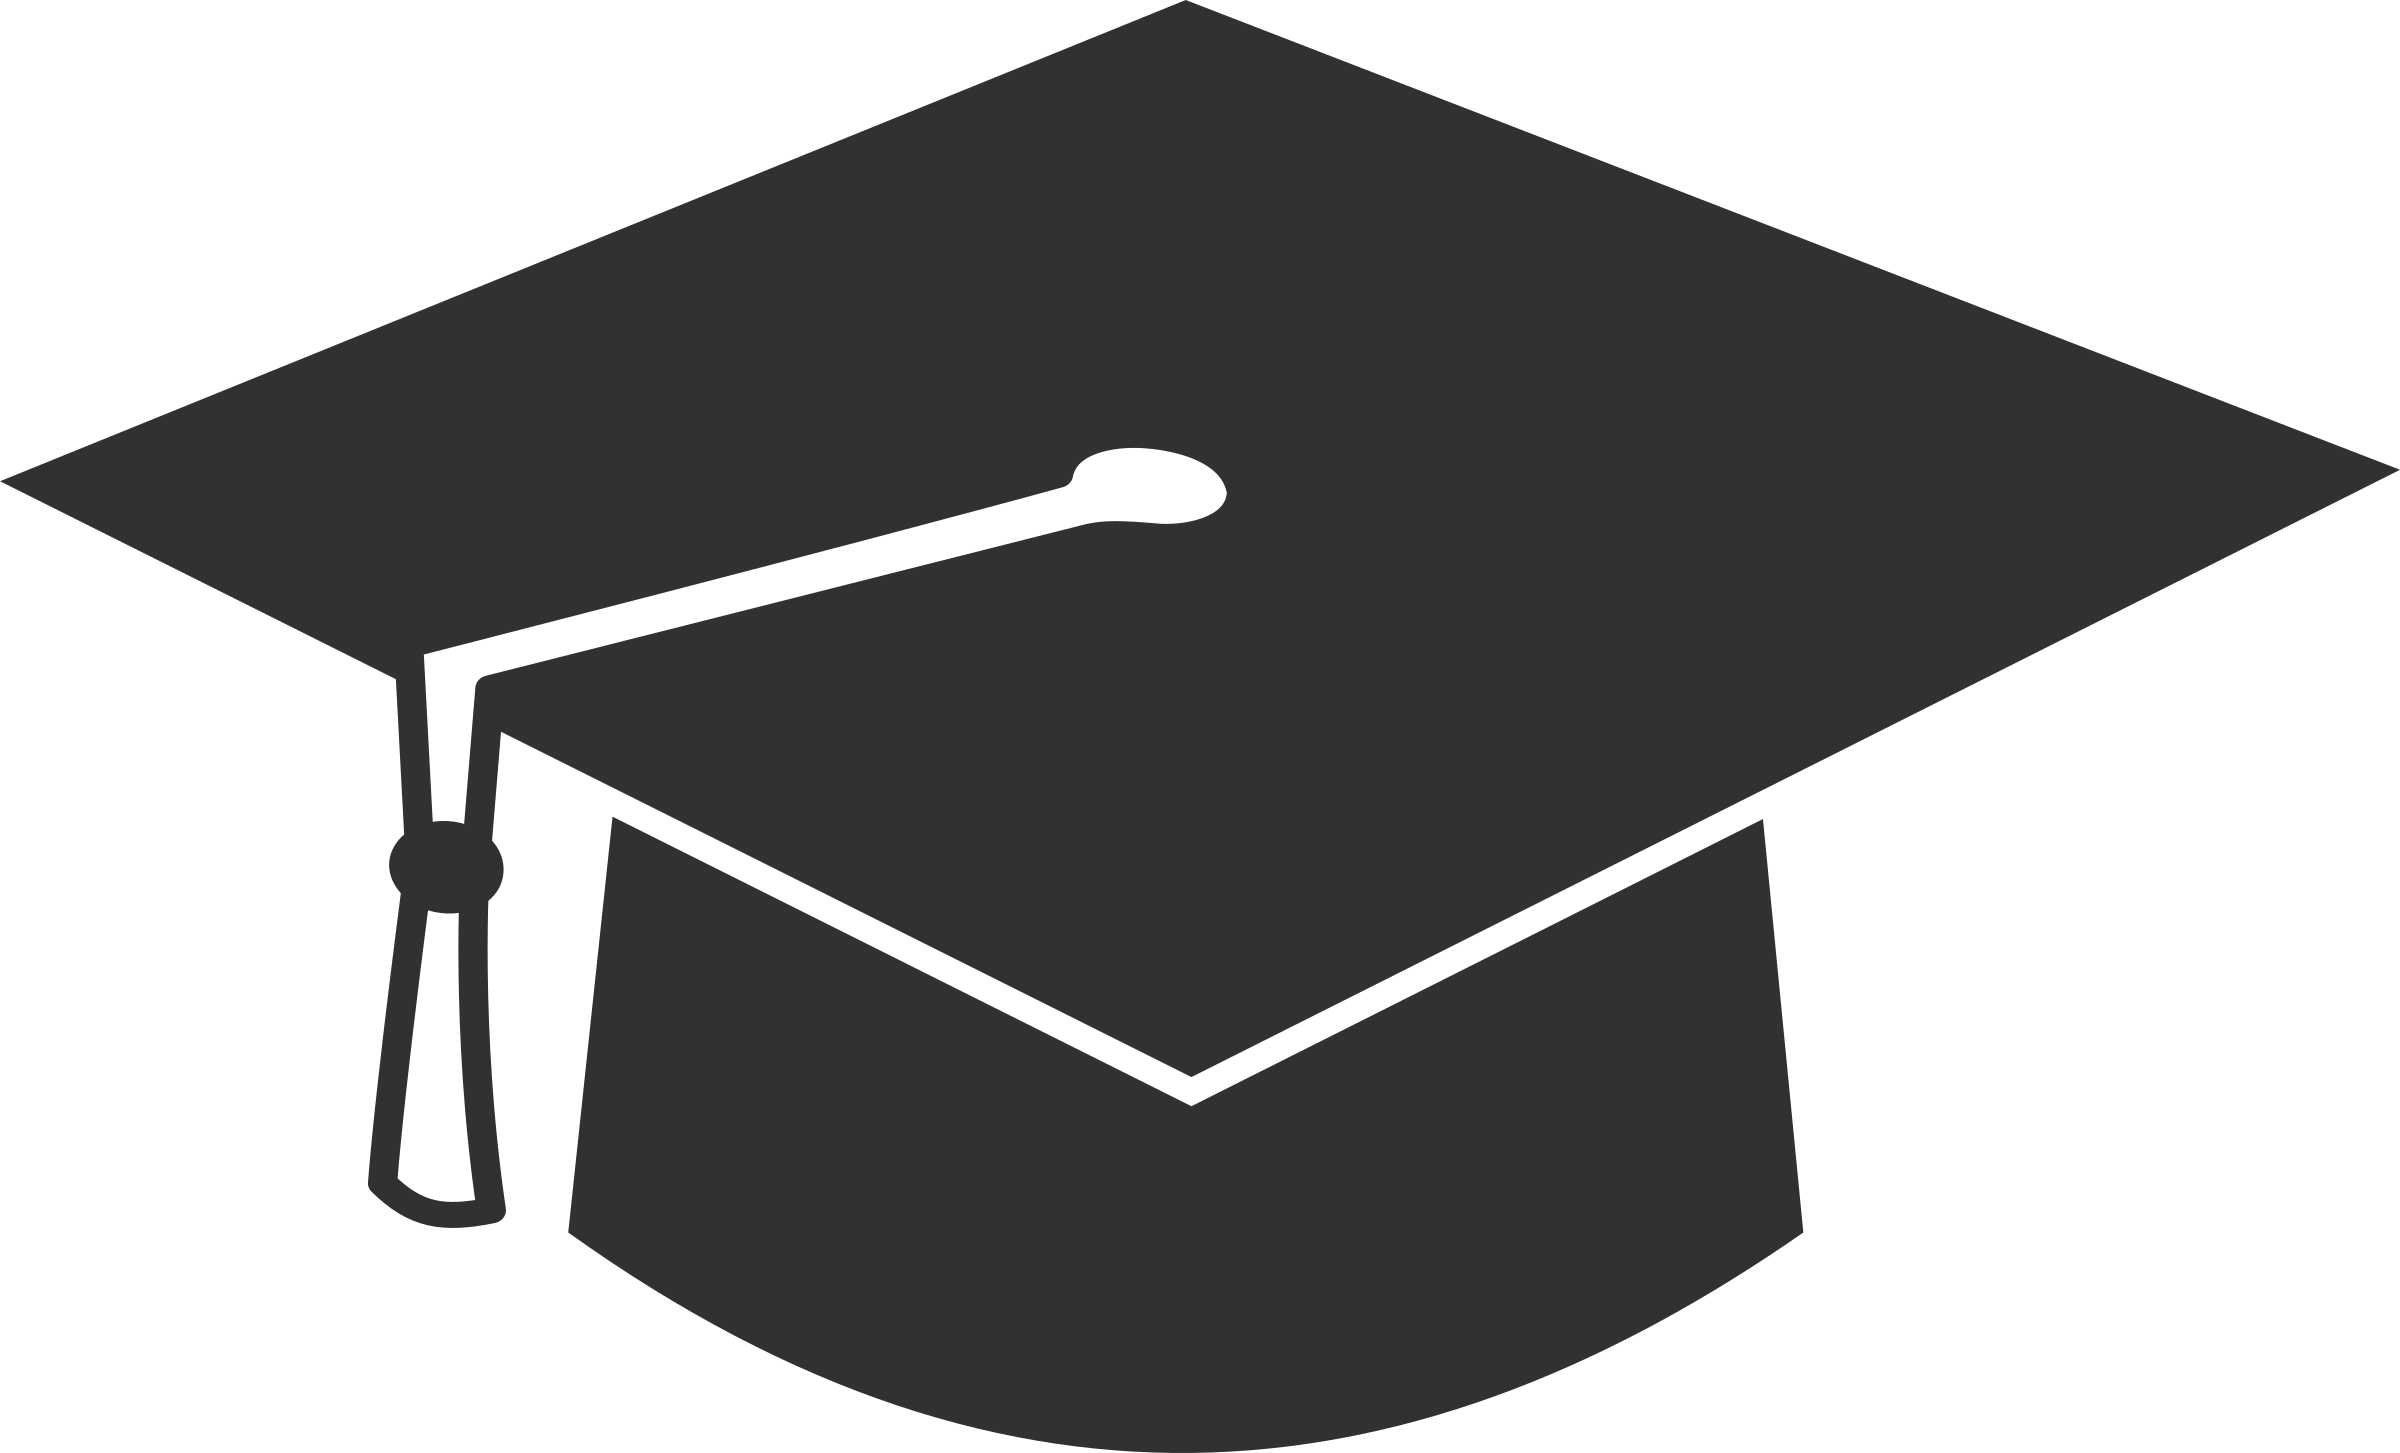 Graduation cap template.